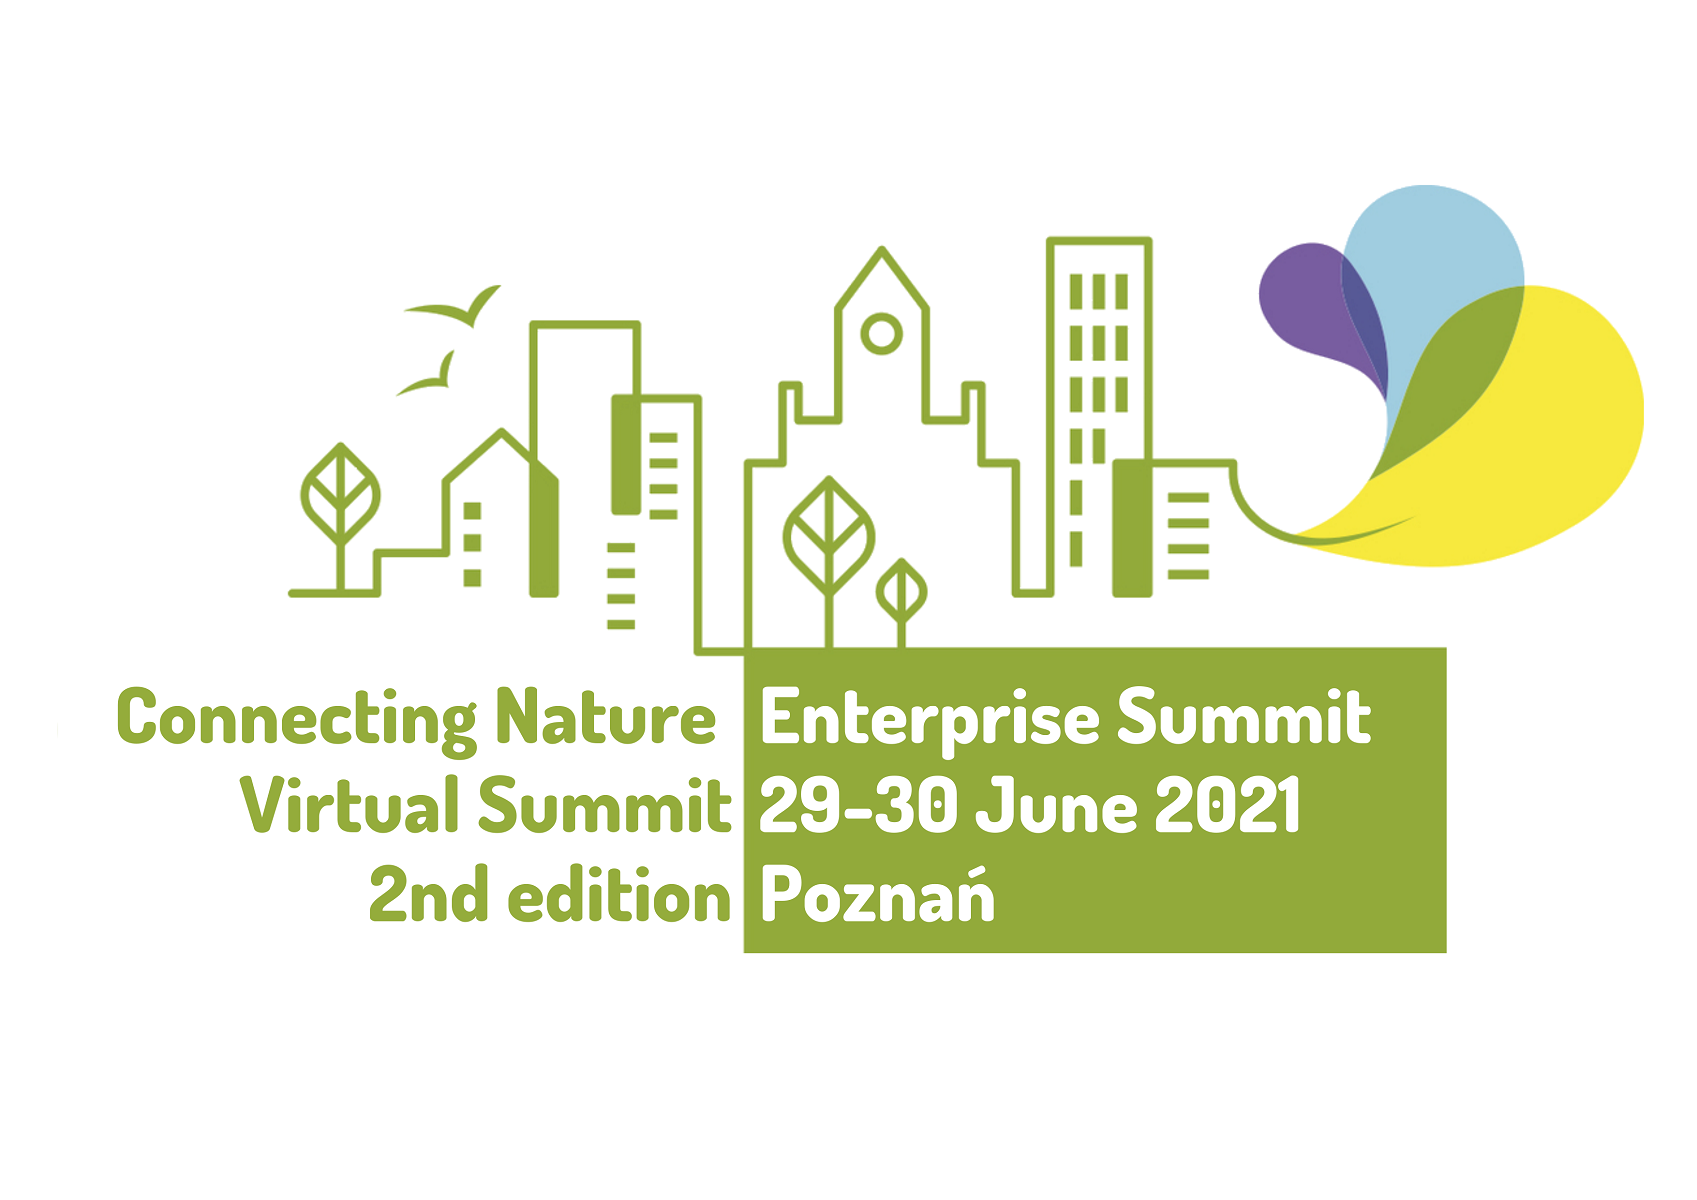 Konferencja Connecting Nature Enterprise Summit